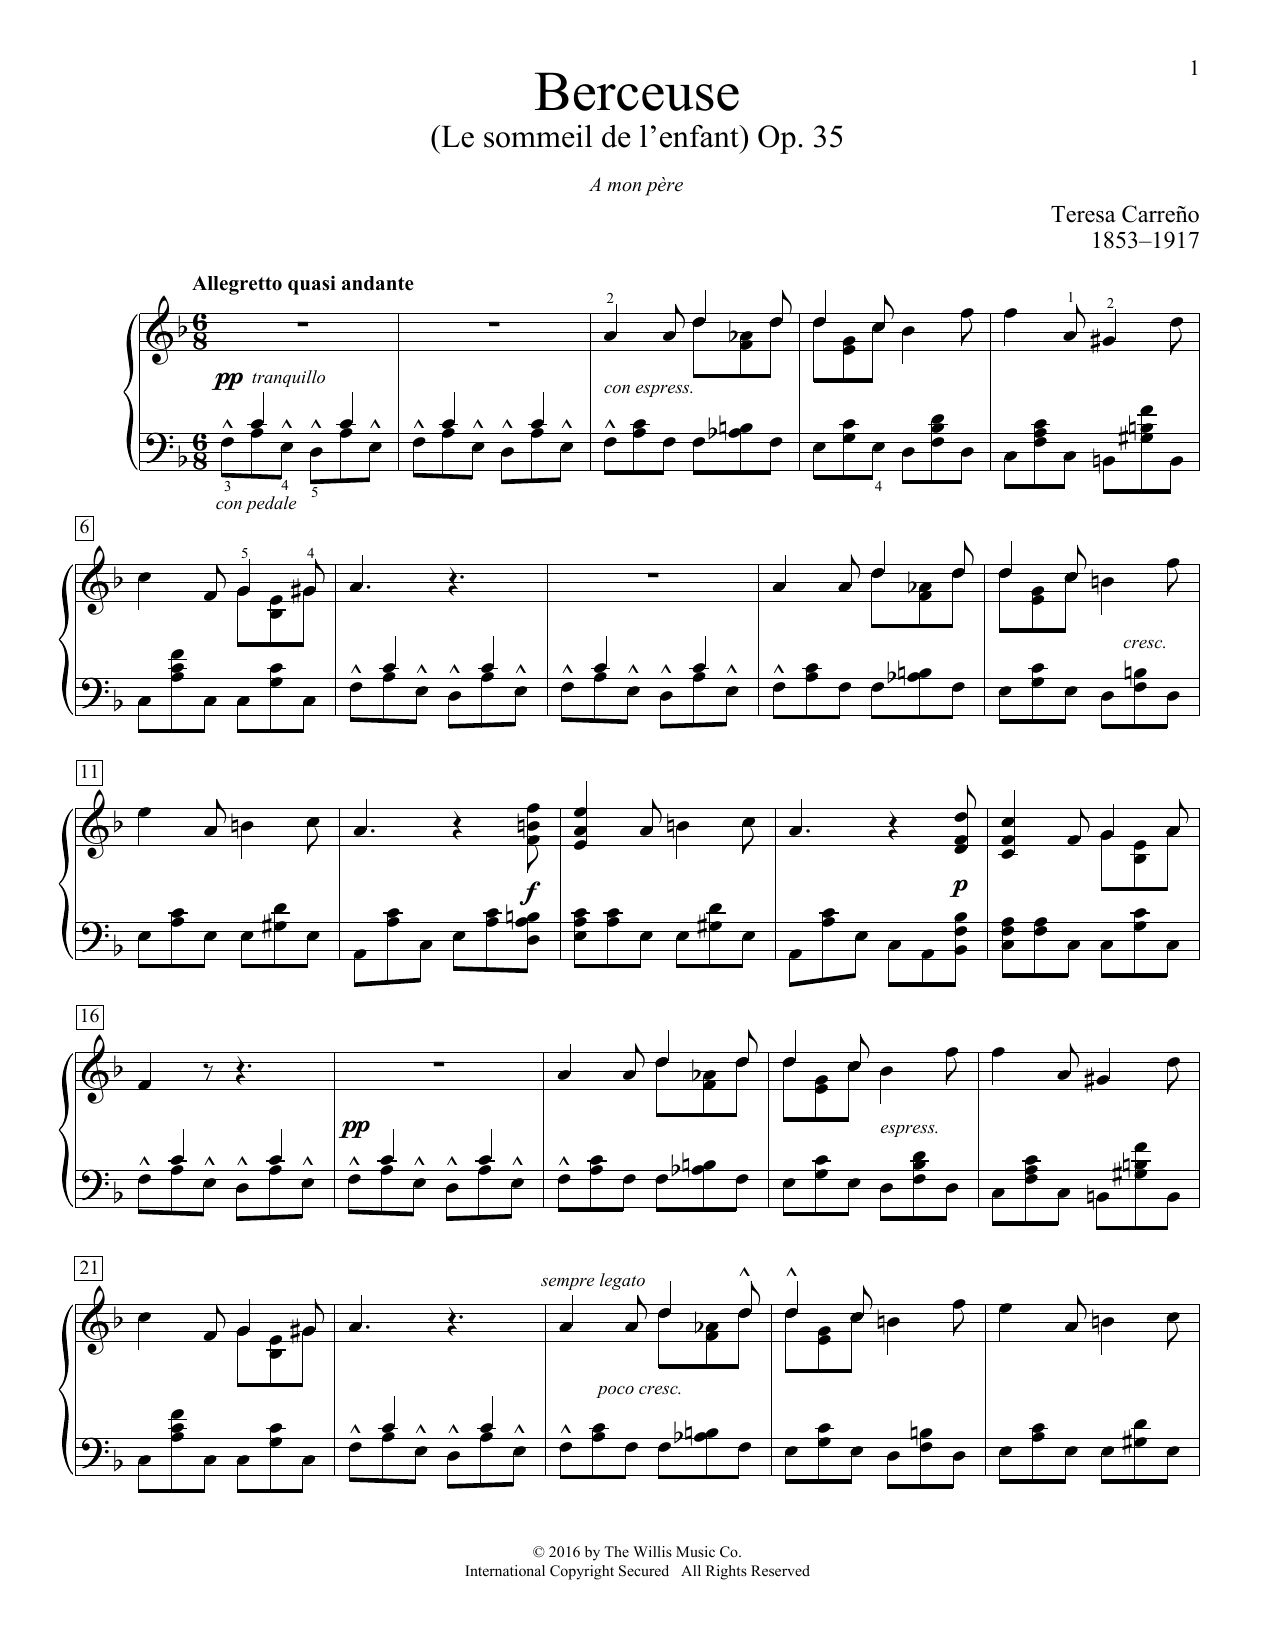 Teresa Carreno Berceuse (Le sommeil de l'enfant), Op. 35 Sheet Music Notes & Chords for Educational Piano - Download or Print PDF